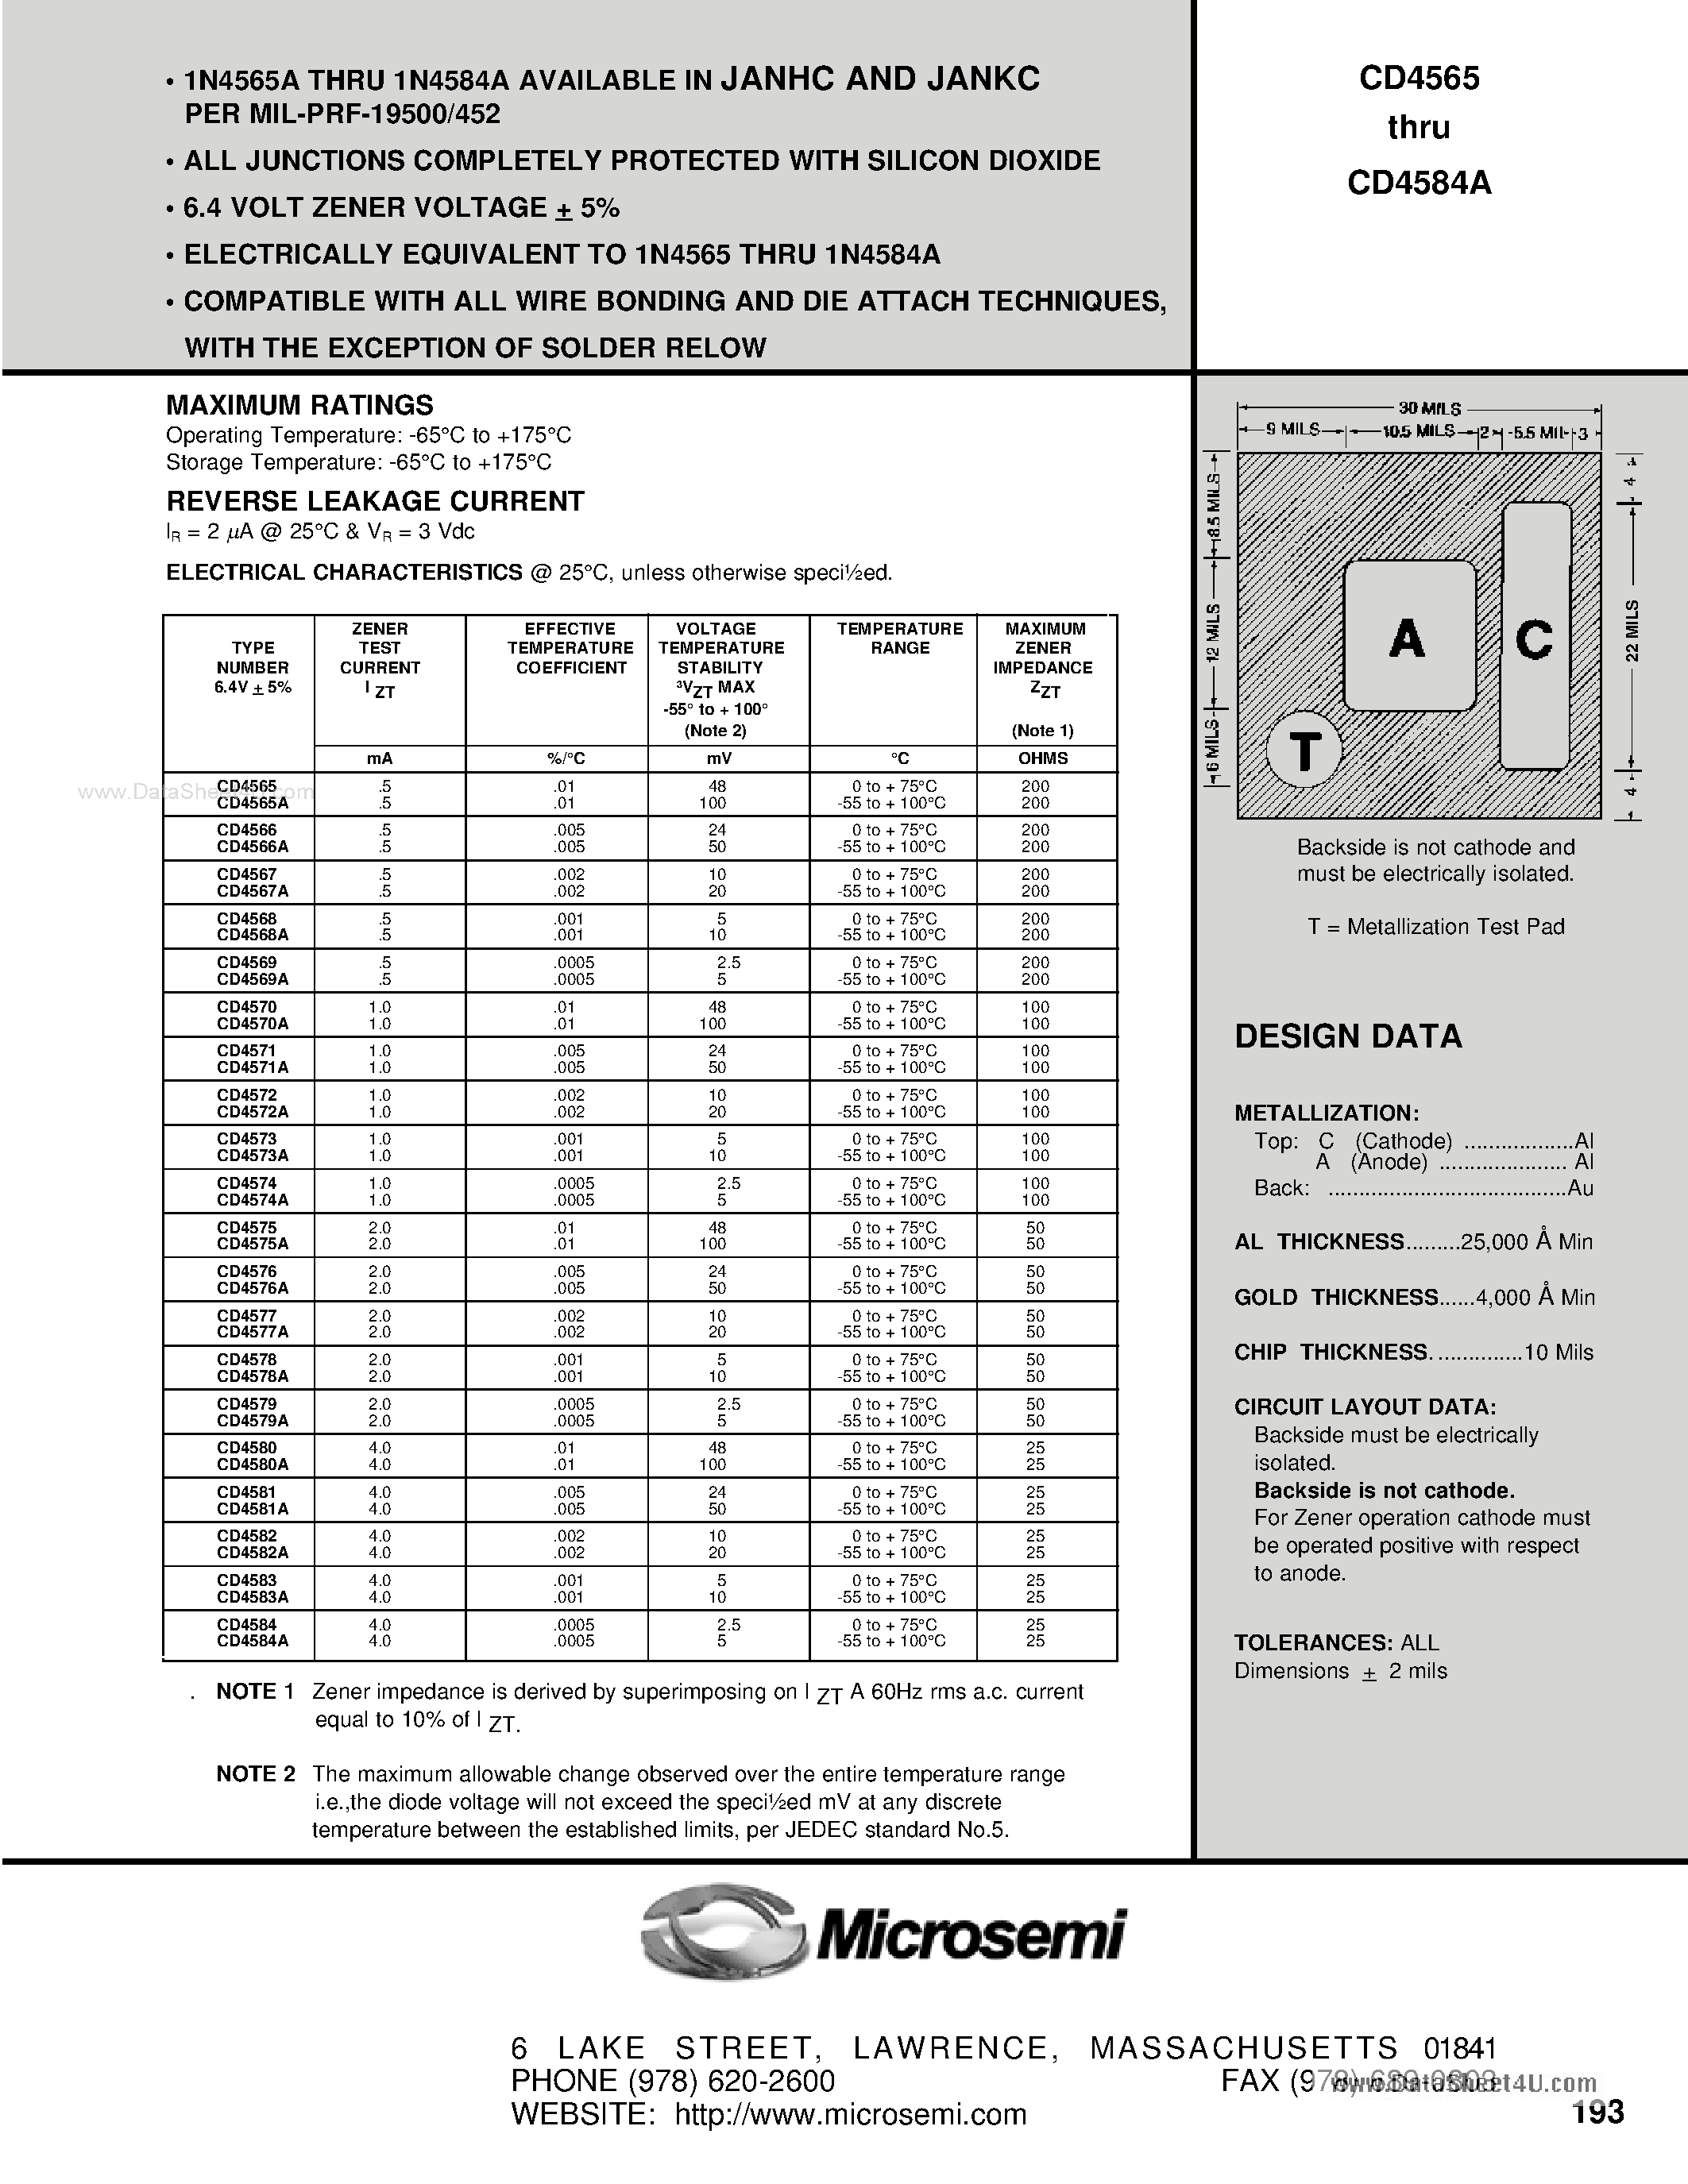 Datasheet CD4565 - (CD45xx) 6.4 VOLT ZENER VOLTAGE page 1